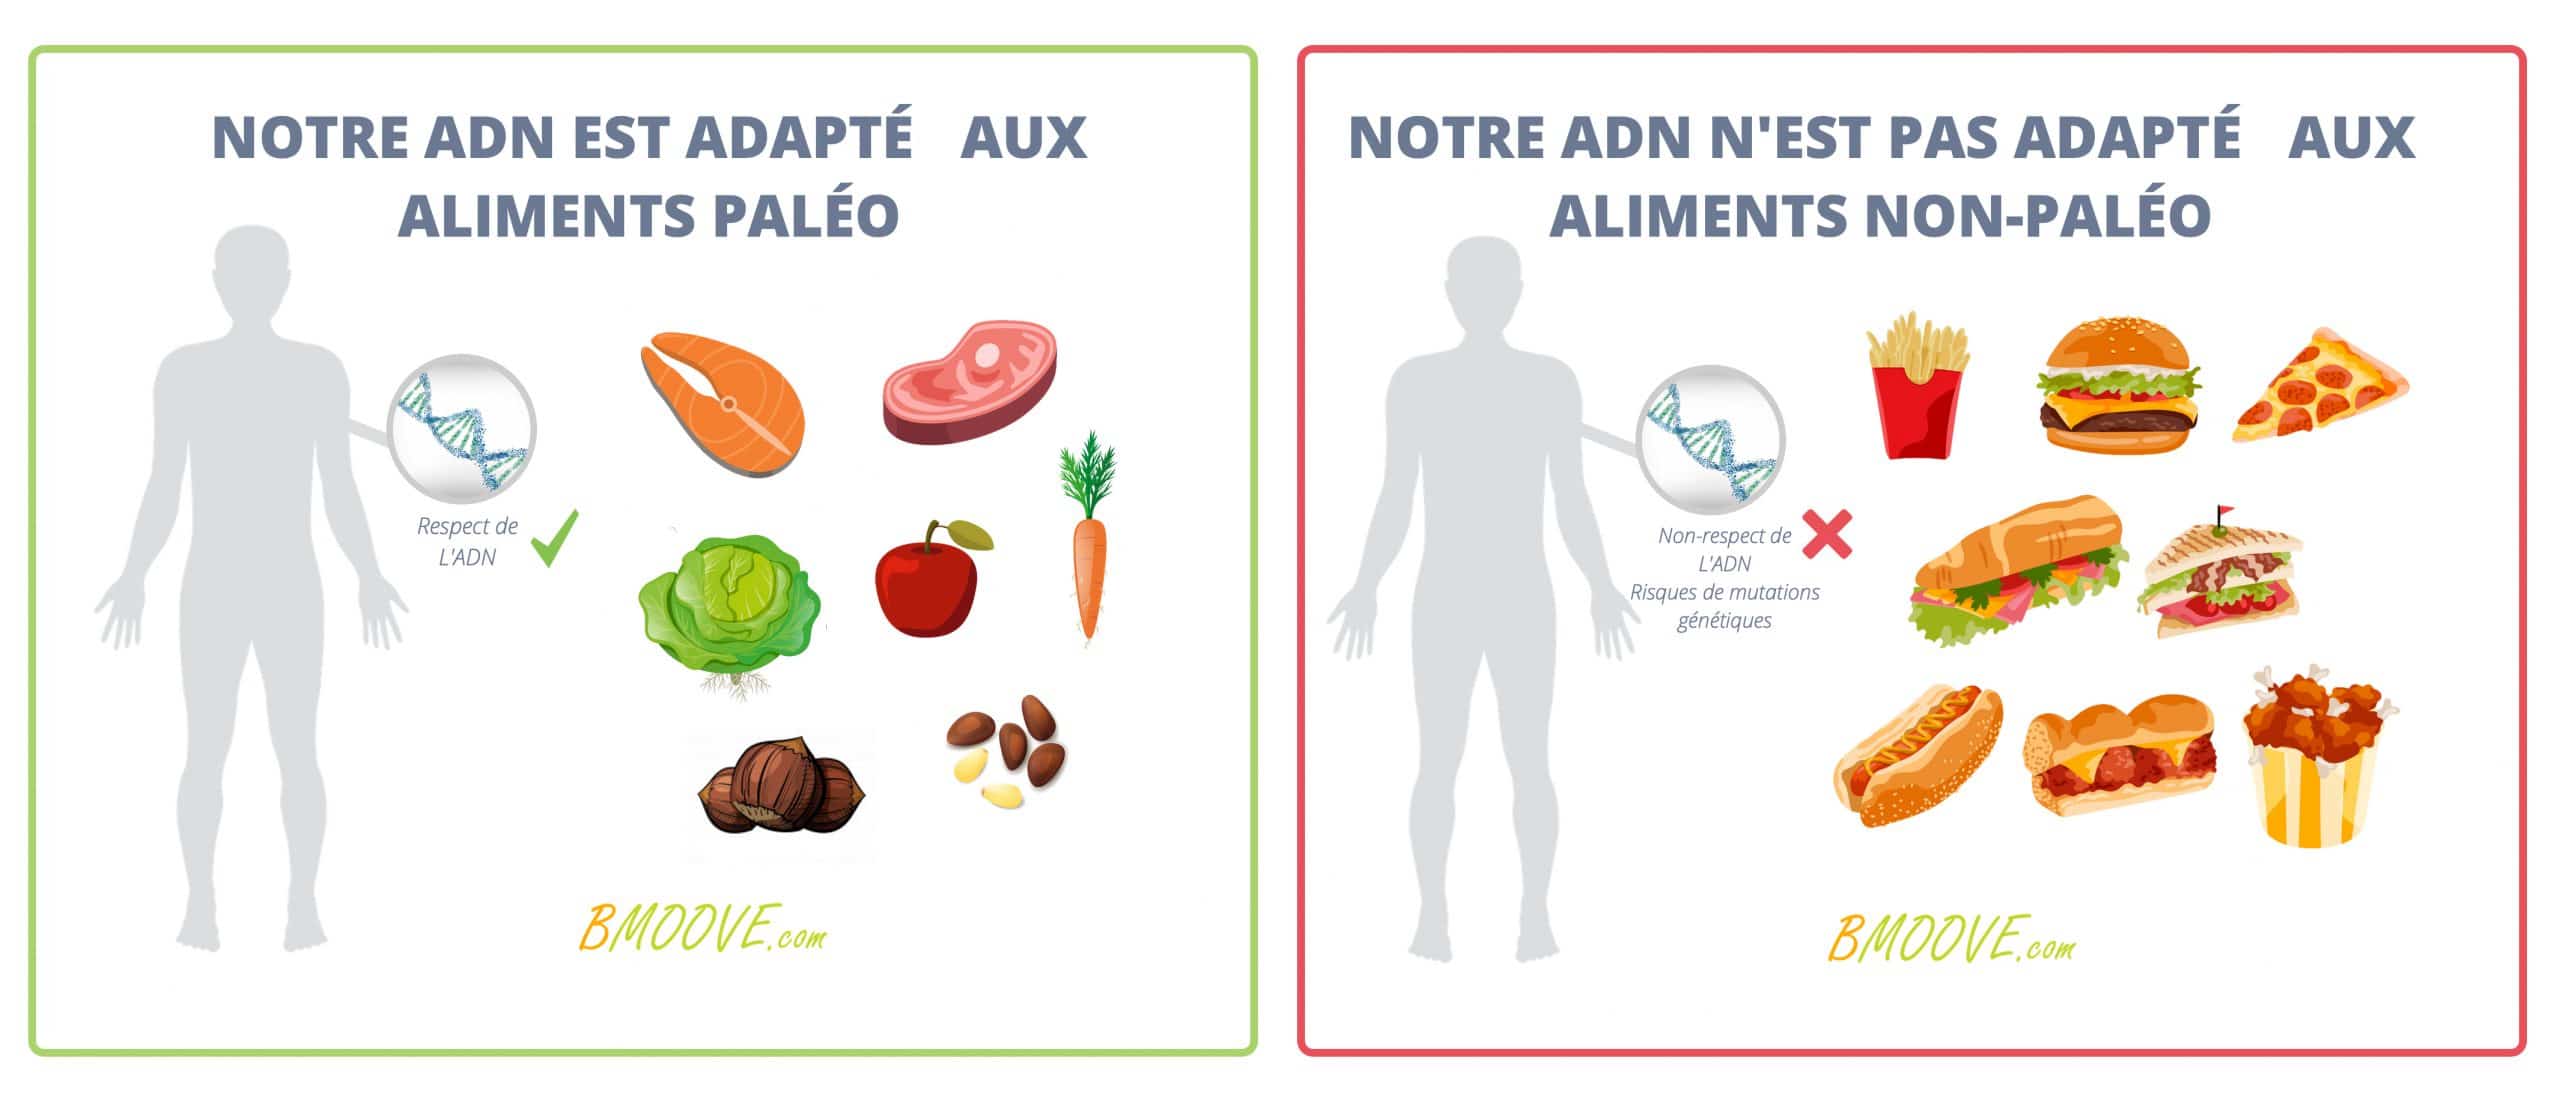 pictogramme aliments adaptés et non adaptés à l'adn humain